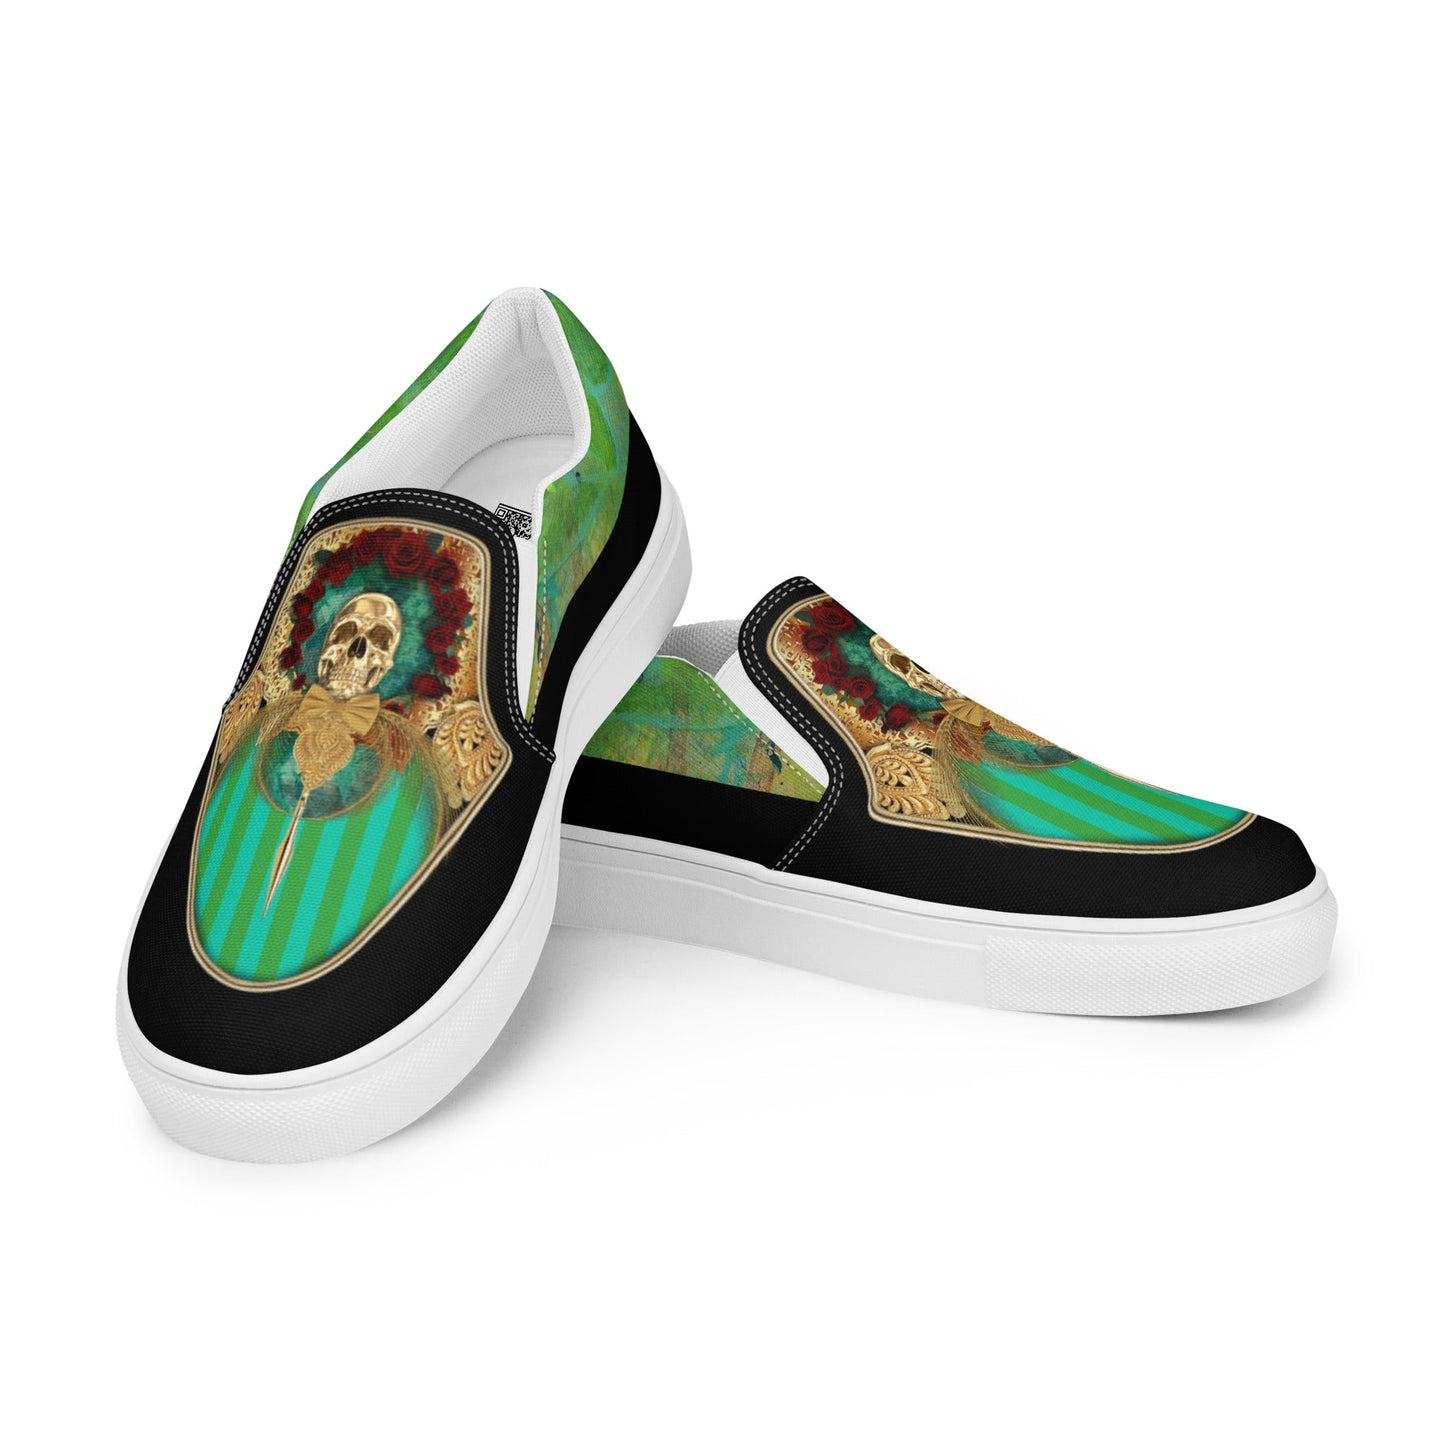 klasneakers Women’s slip-on canvas shoes - Green Skull